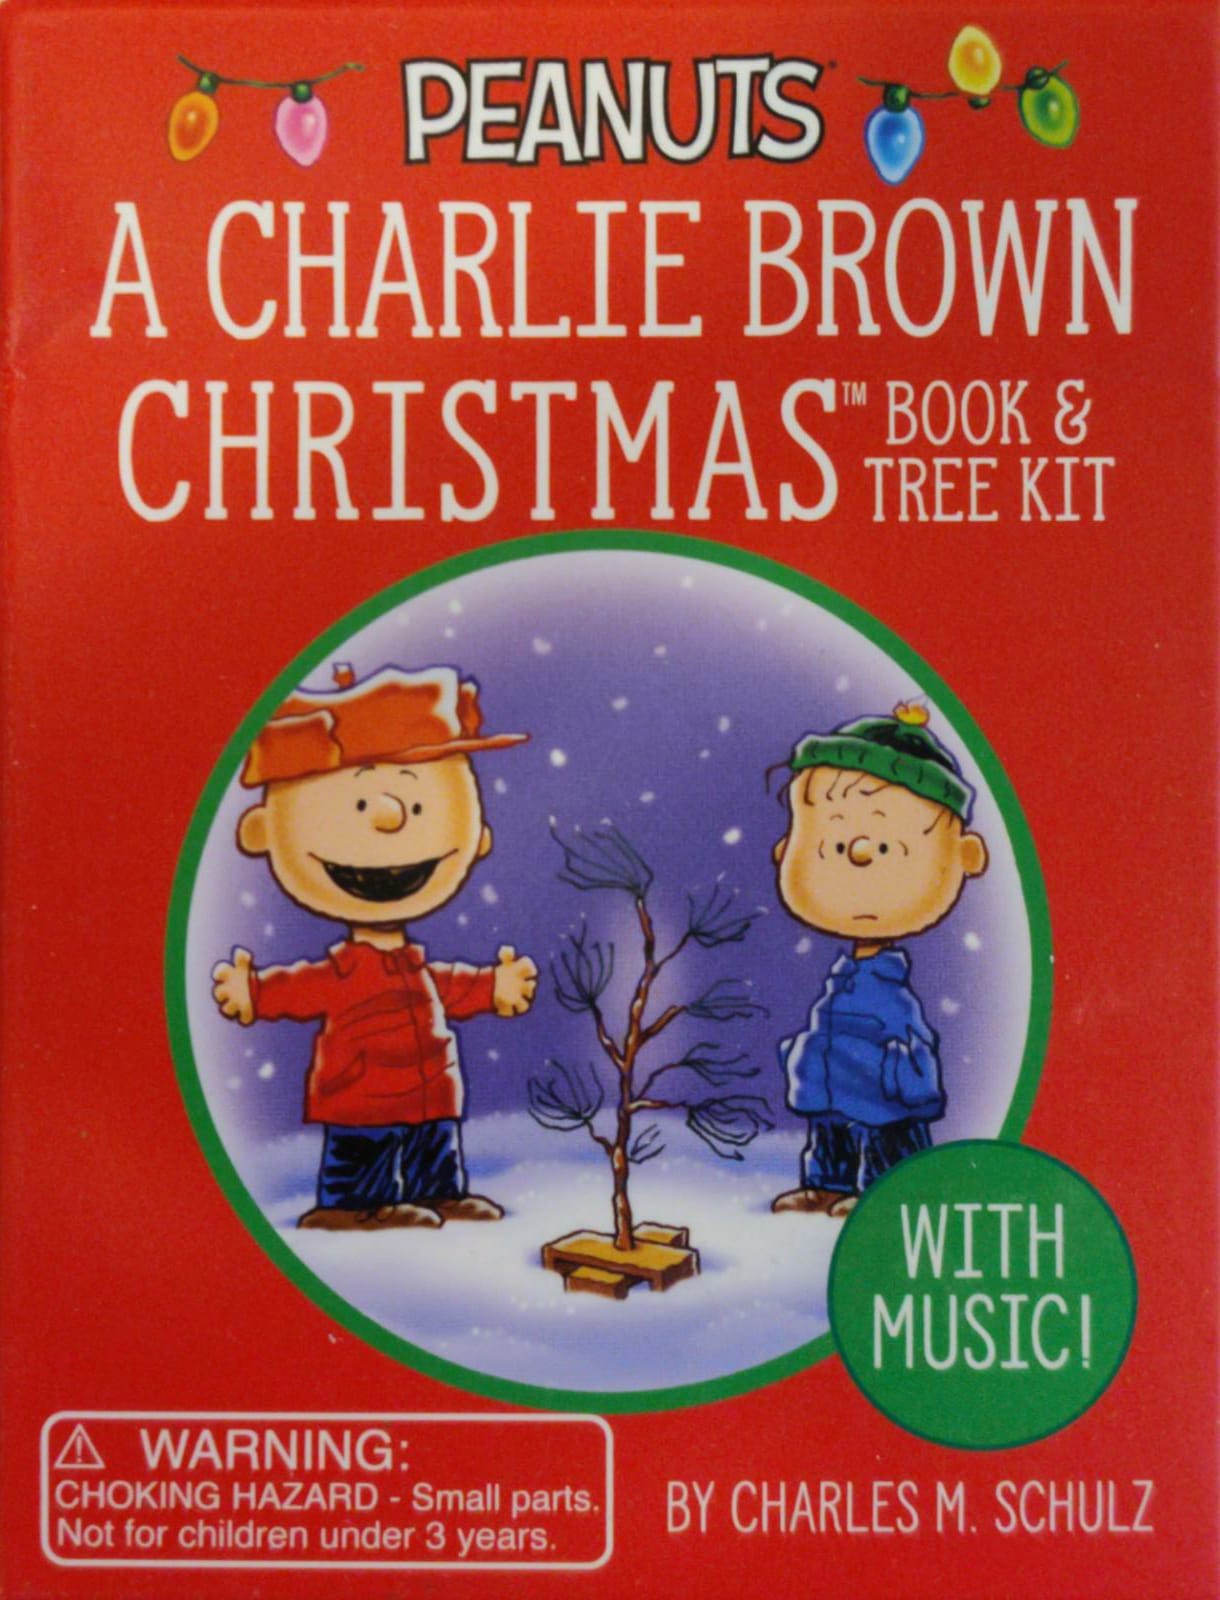 Peanuts A Charlie Brown Christmas - Book & Tree Kit